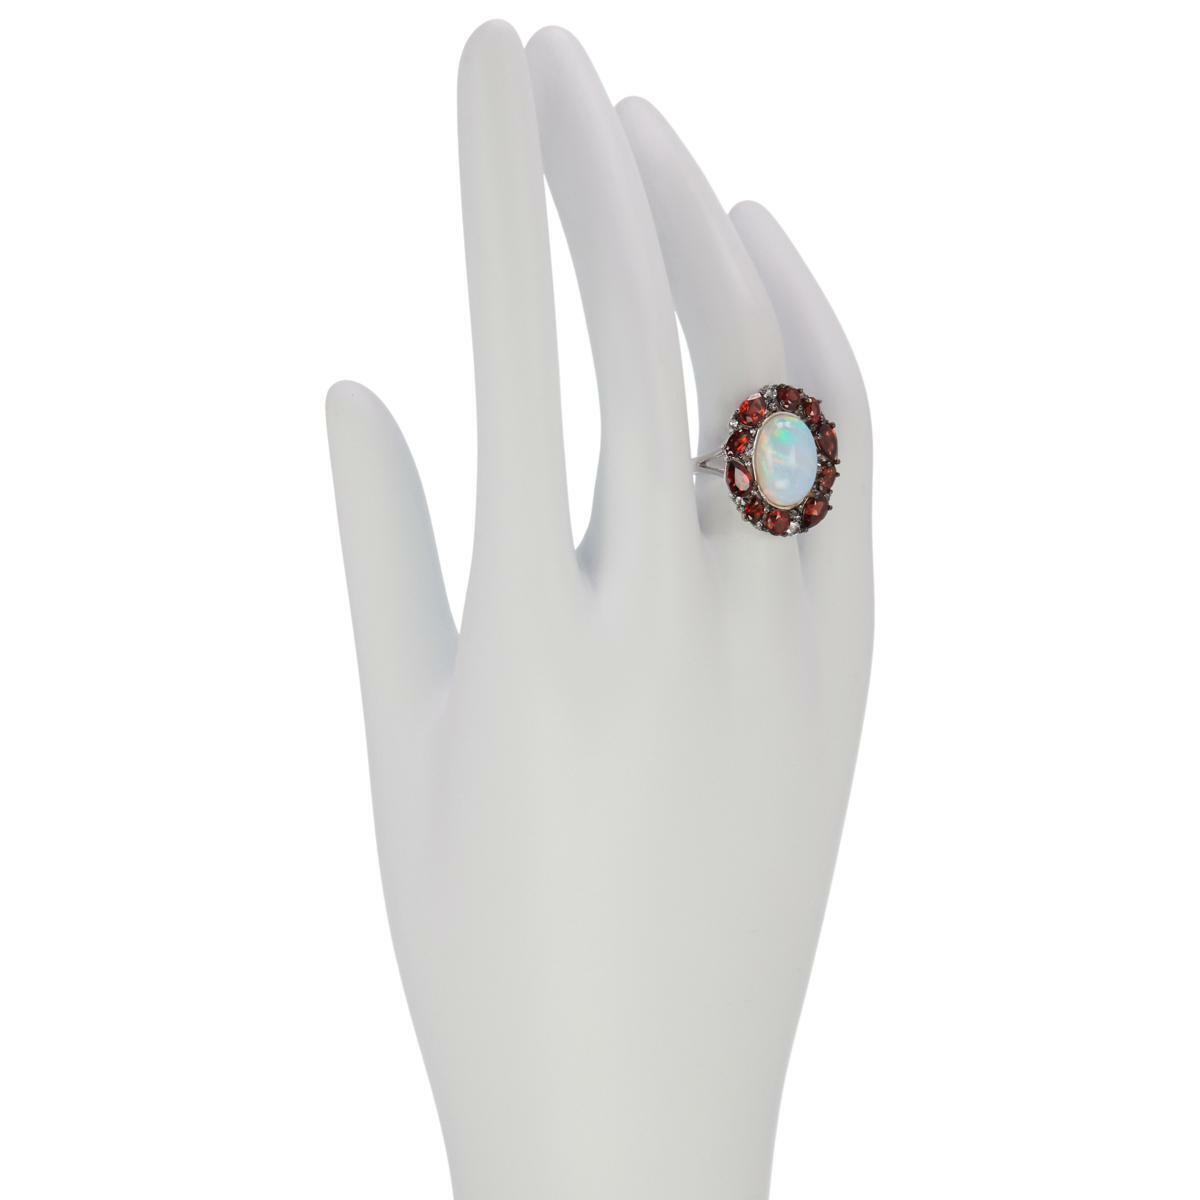 Paul Deasy Gem Opal, Garnet & White Topaz Sterling Silver Oval Ring Size 8